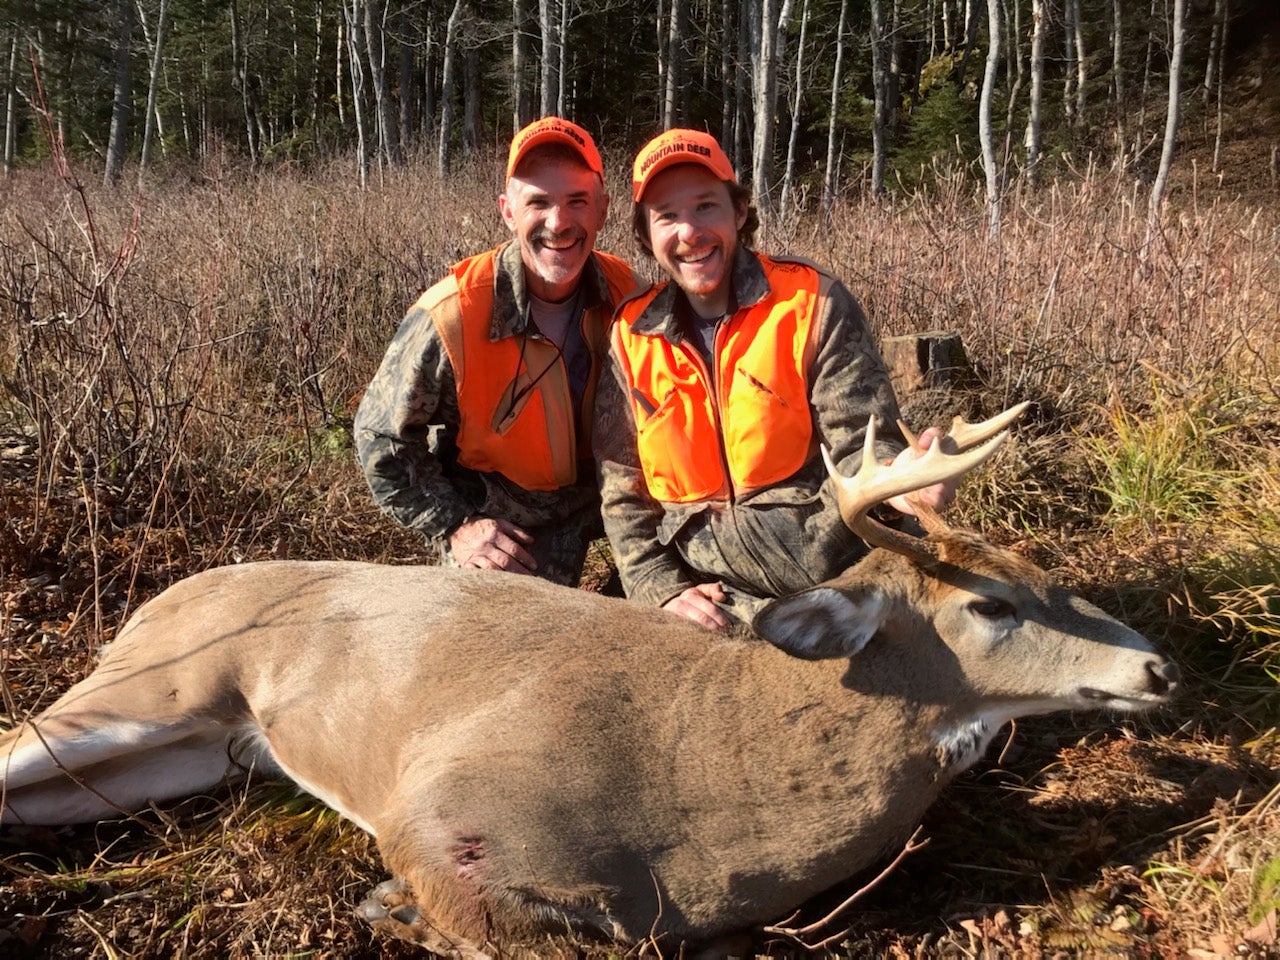 Rodney Elmer of Mountain Deer: Hunting, Fatherhood & the River of Life